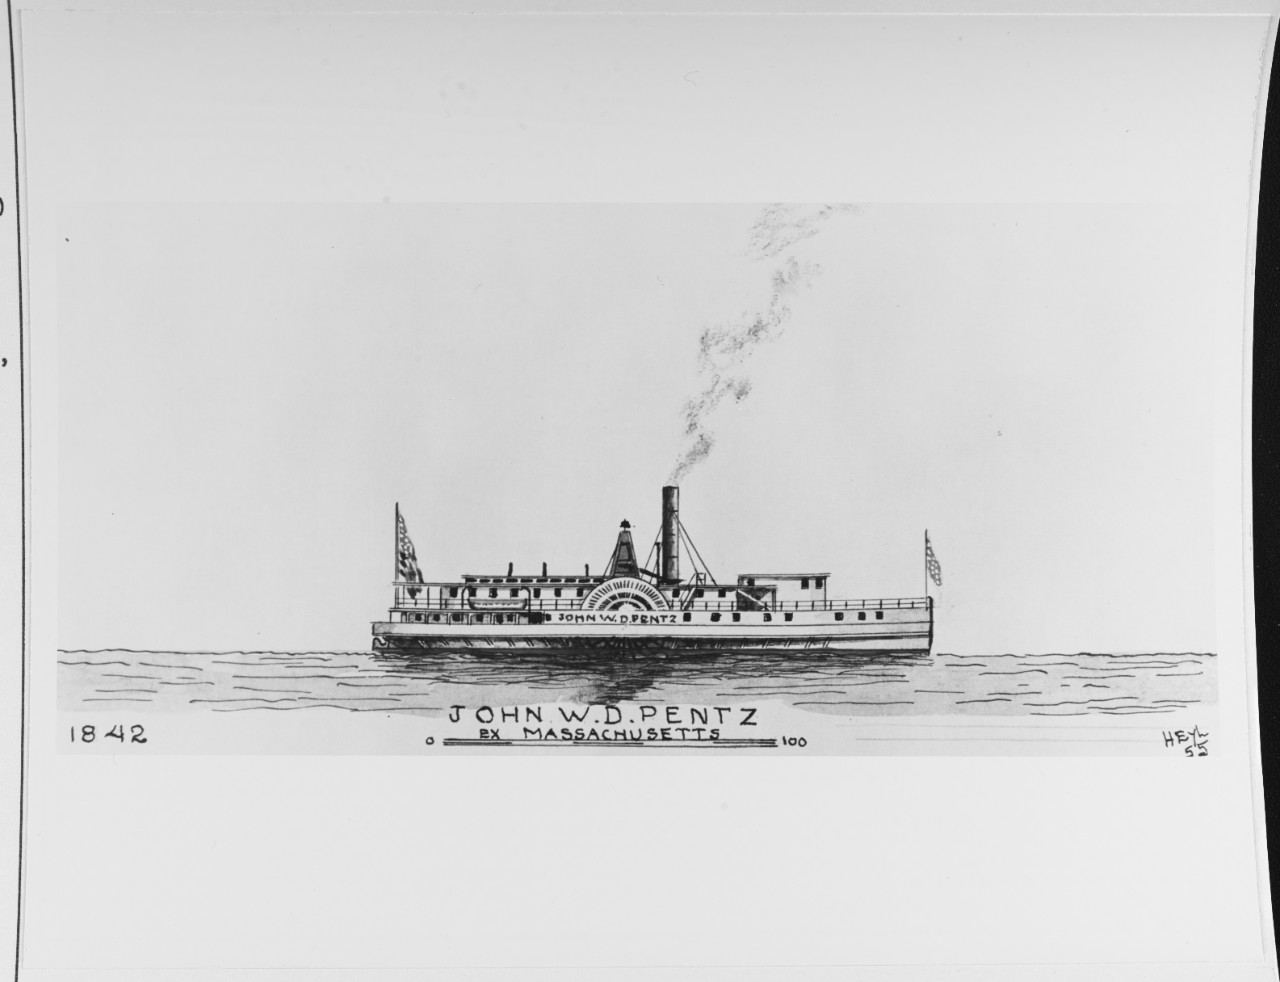 JOHN W. D. PENTZ (American merchant steamer, 1842-1881)